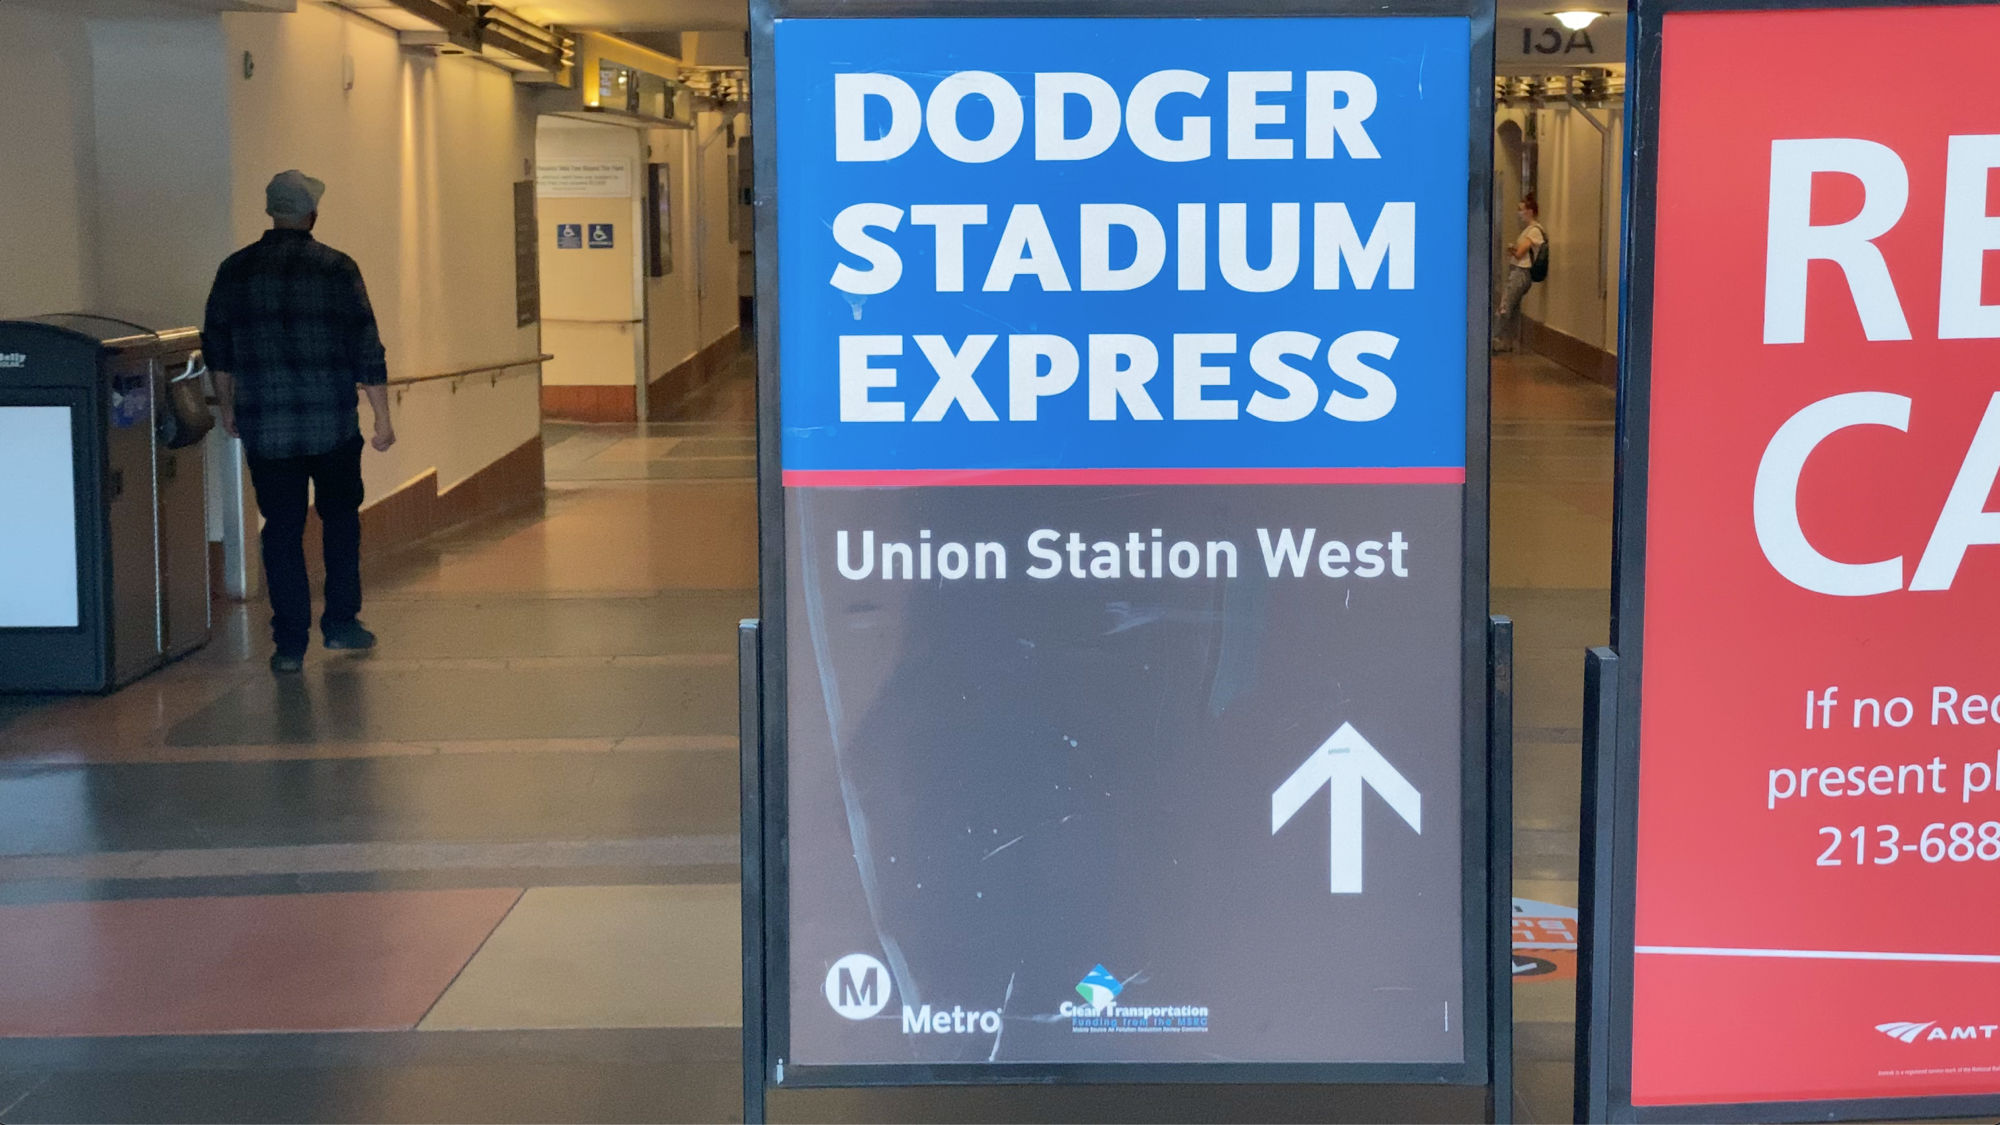 Dodger Stadium Express Union Station West